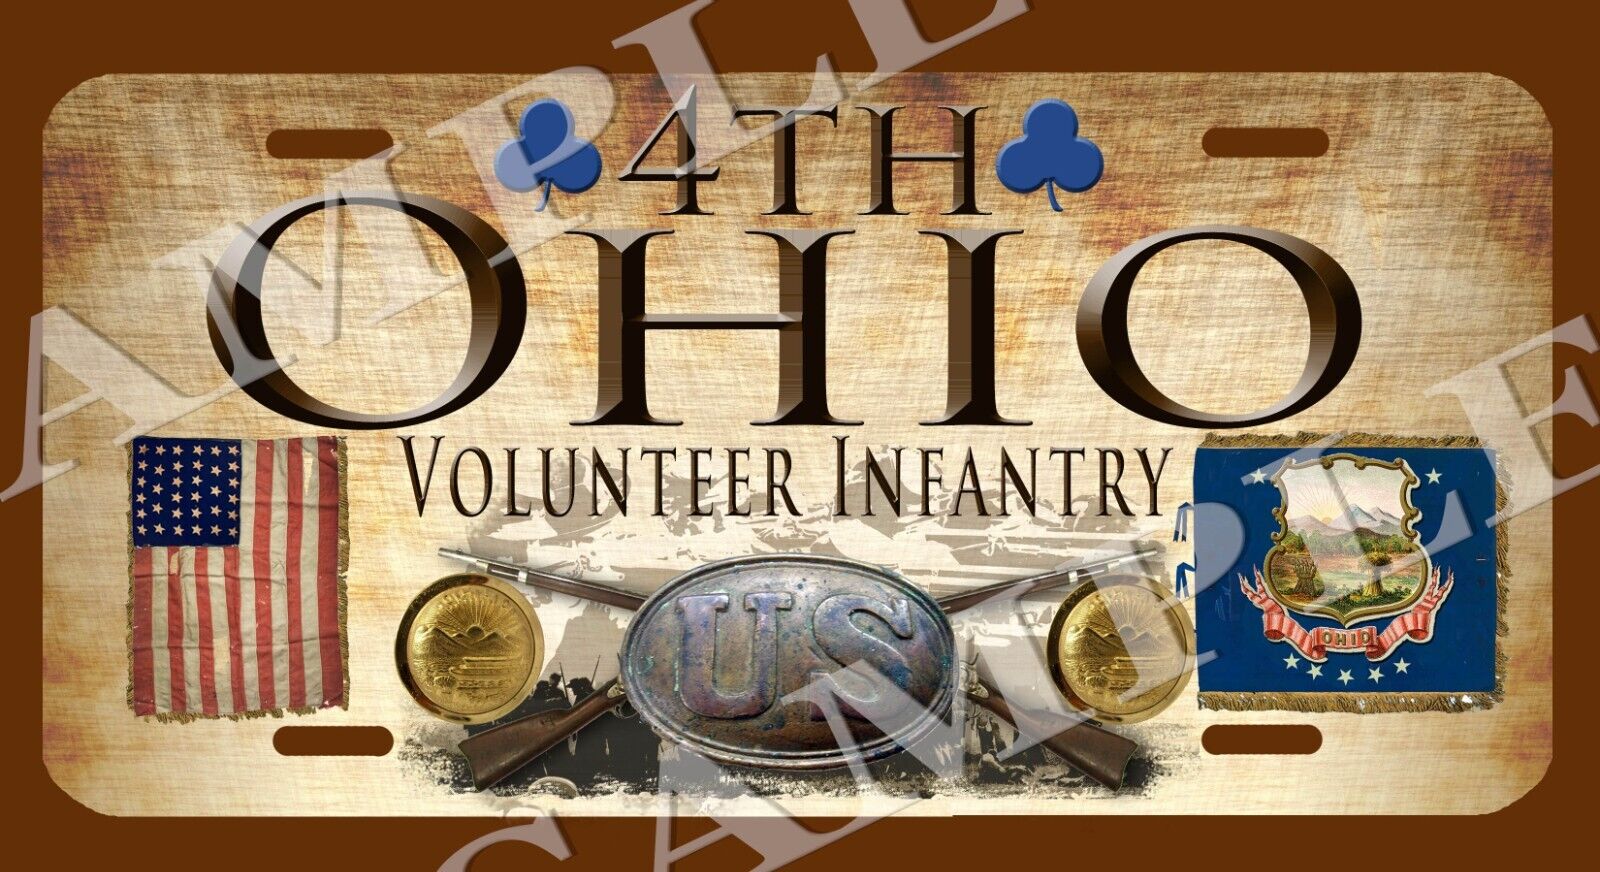 4th Ohio Volunteer Infantry American Civil War Themed vehicle license plate